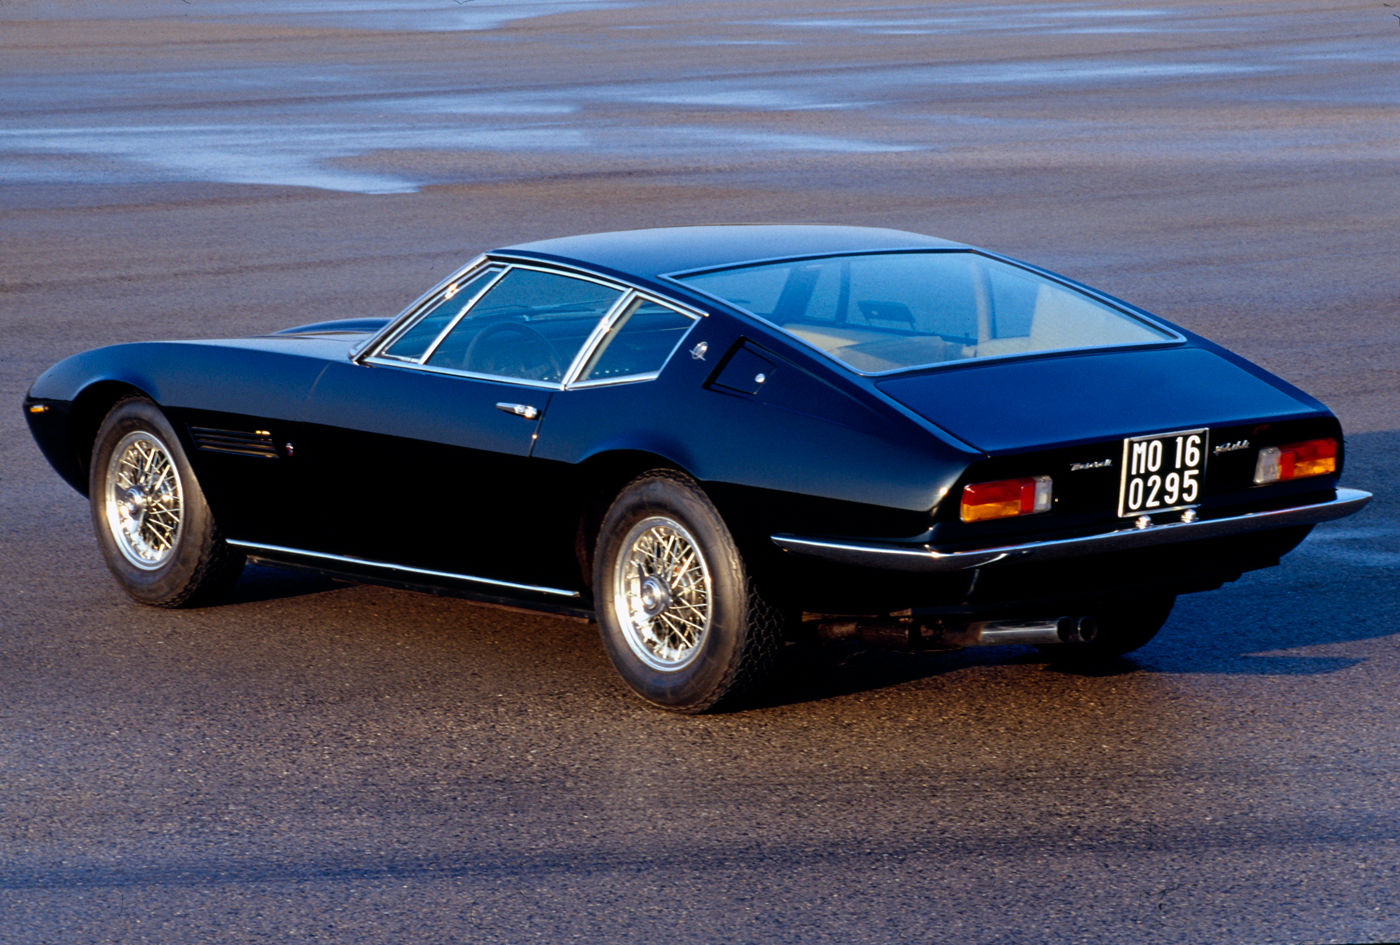 Maserati Classic - GranTurismo Ghibli - carrosserie noire - vue latérale postérieure